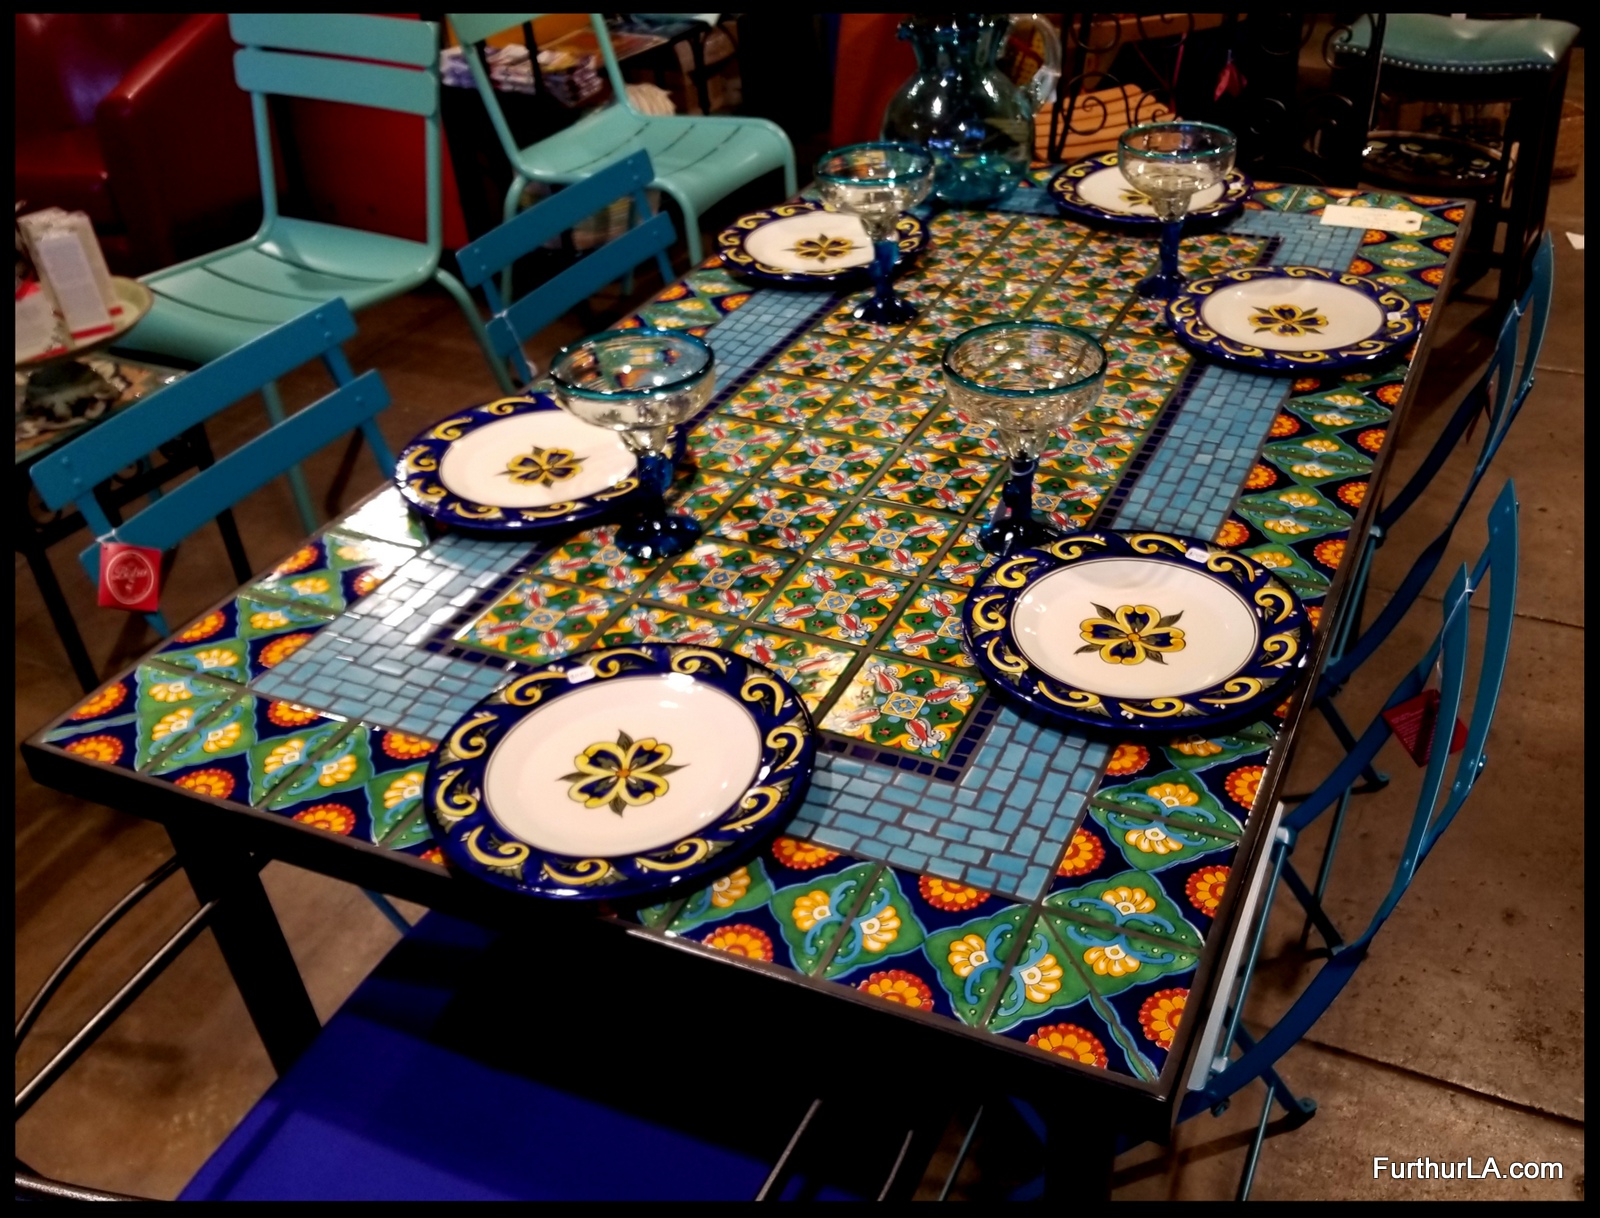 Furthur Wholesale Mosaic Dining Tables